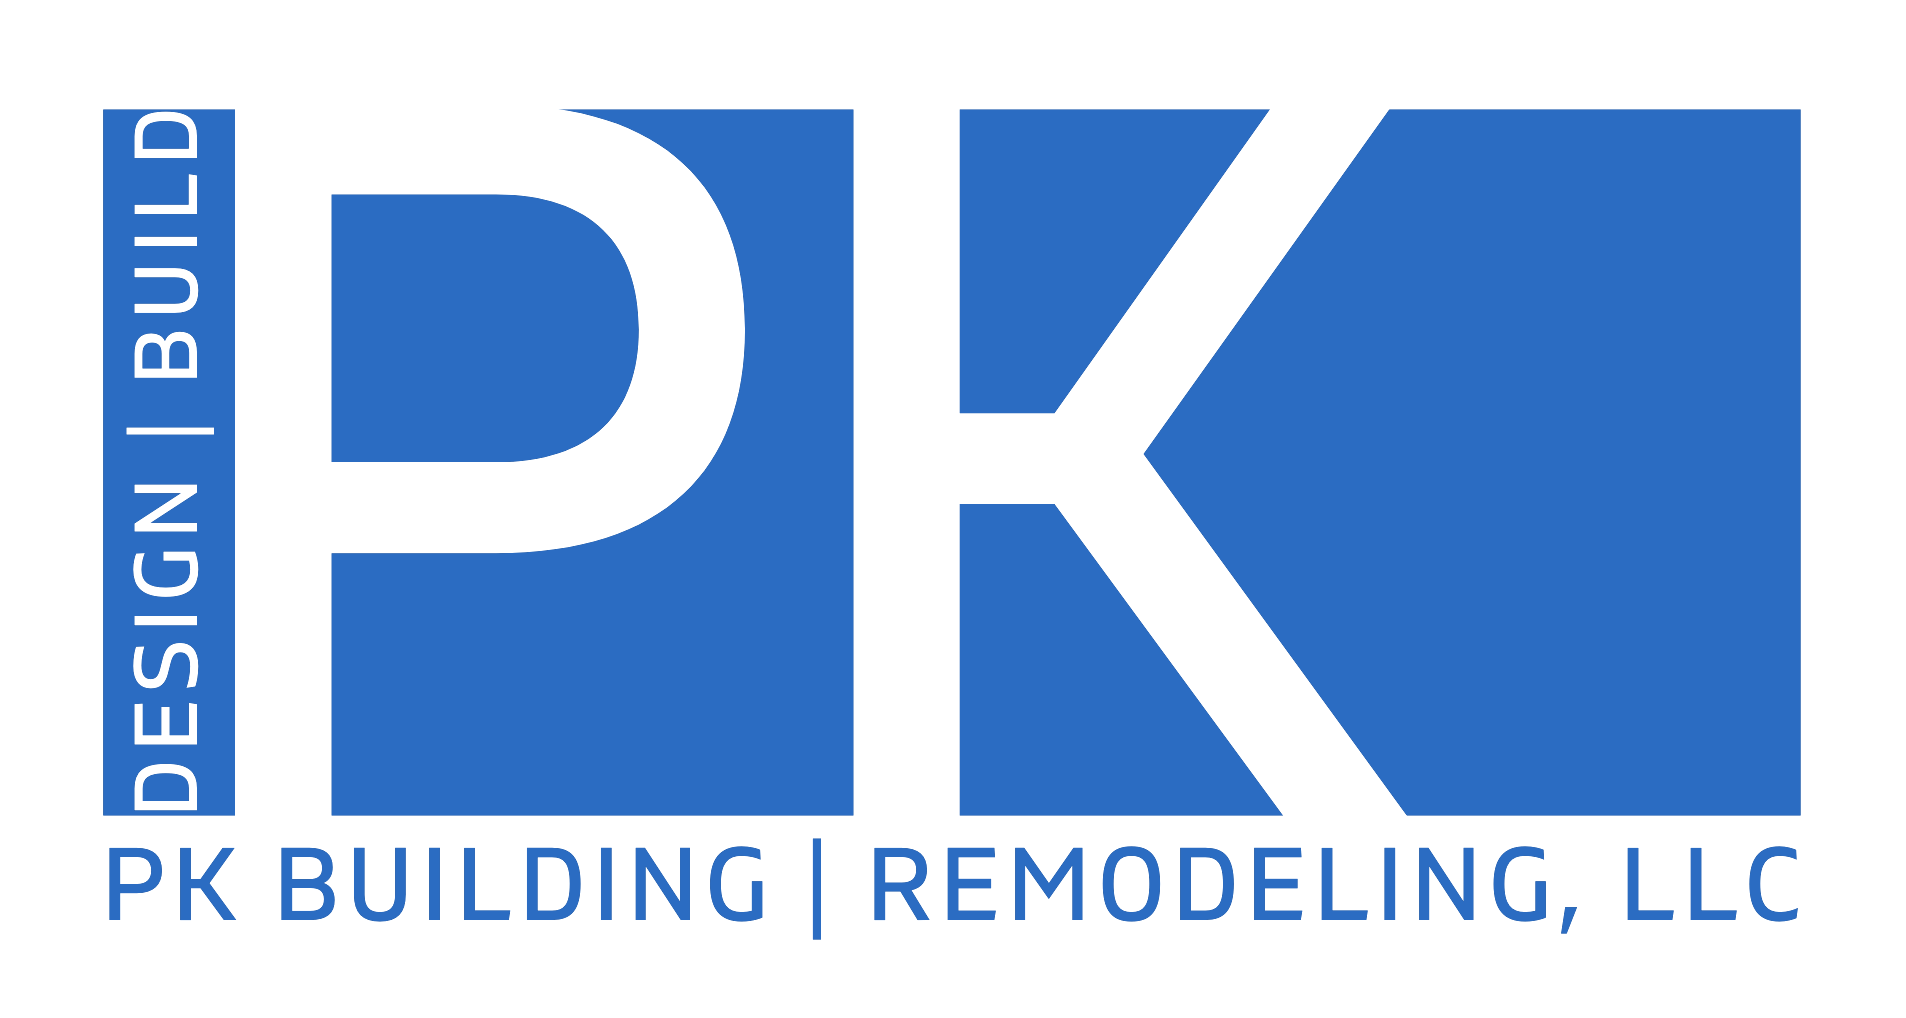 PK Building Remodeling, LLC